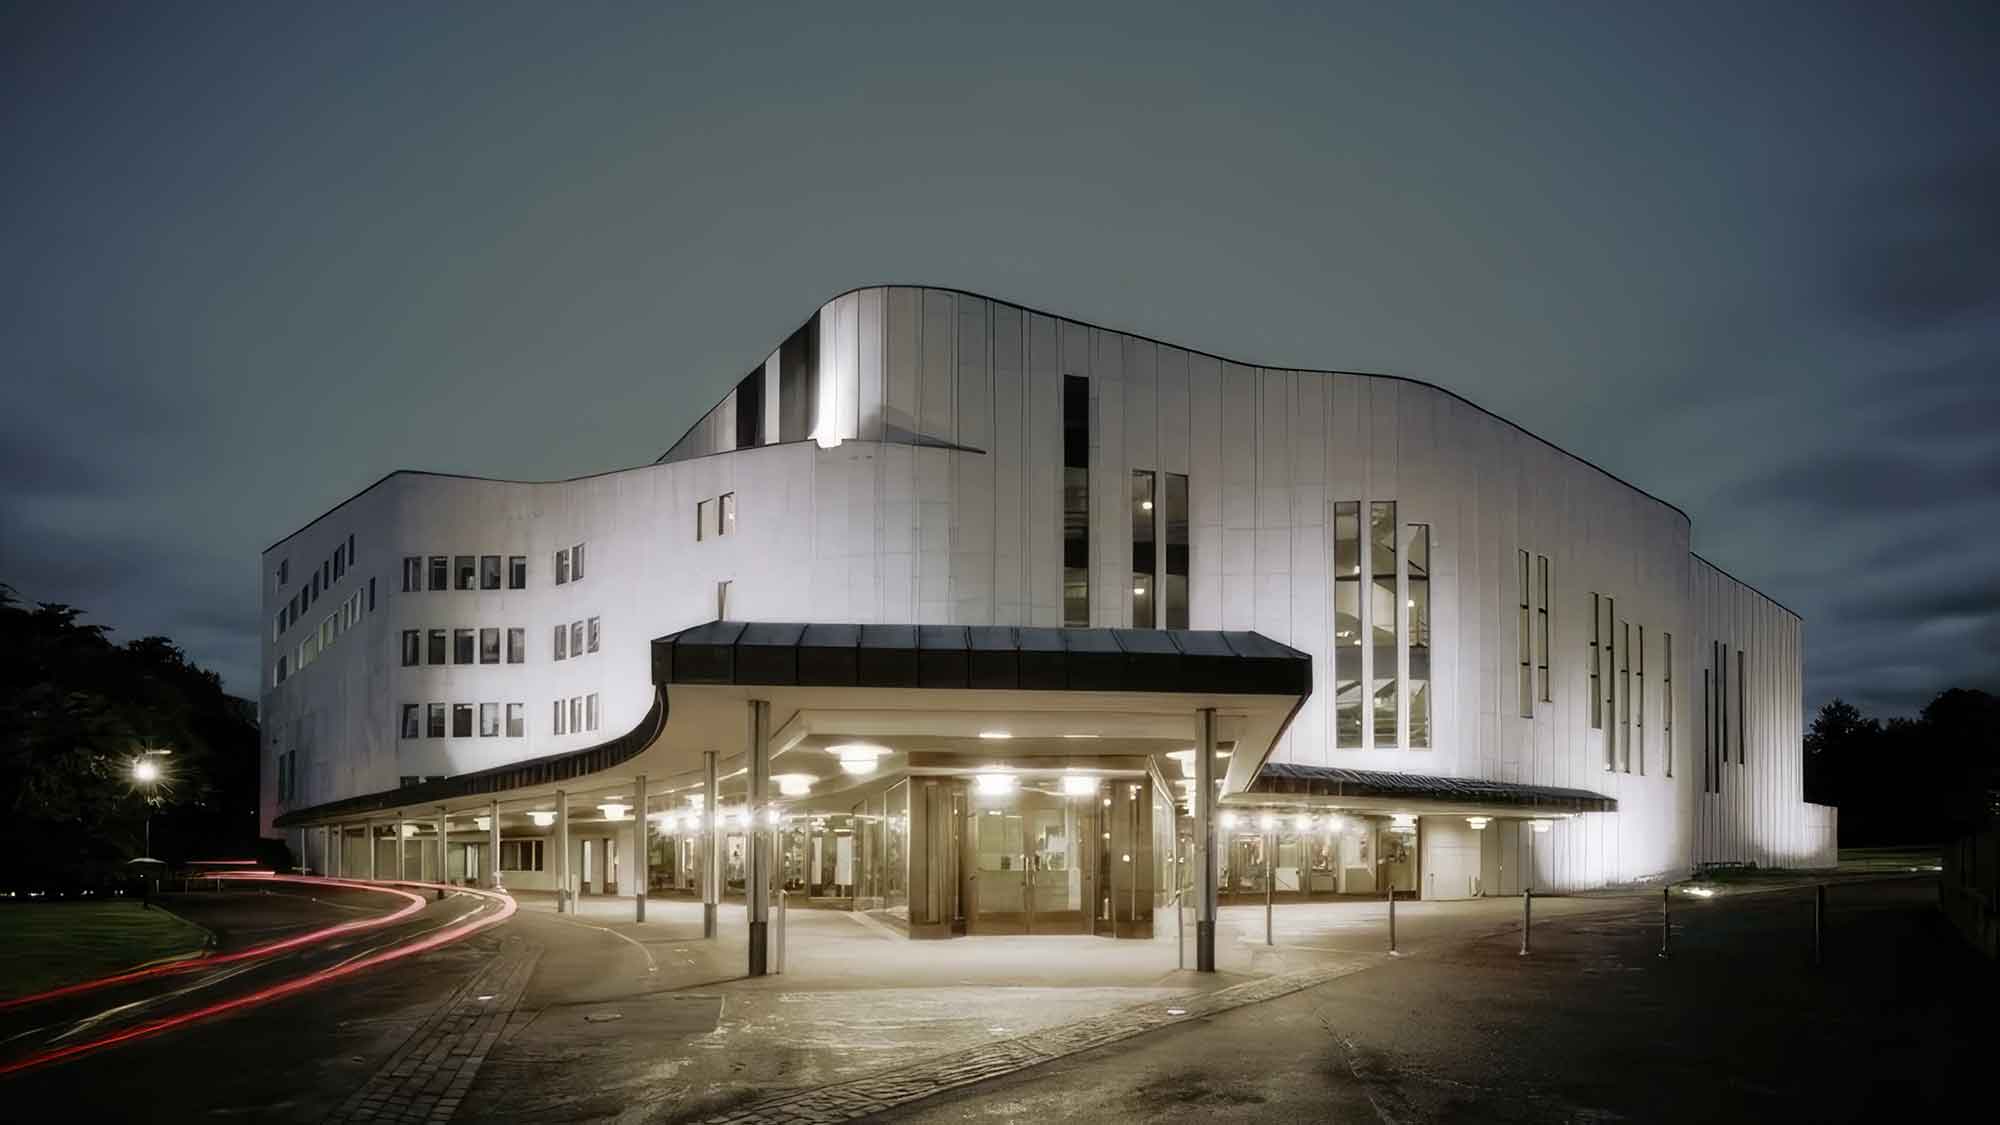 Aalto Theater feiert Jahreswechsel mit großer Silvesterparty